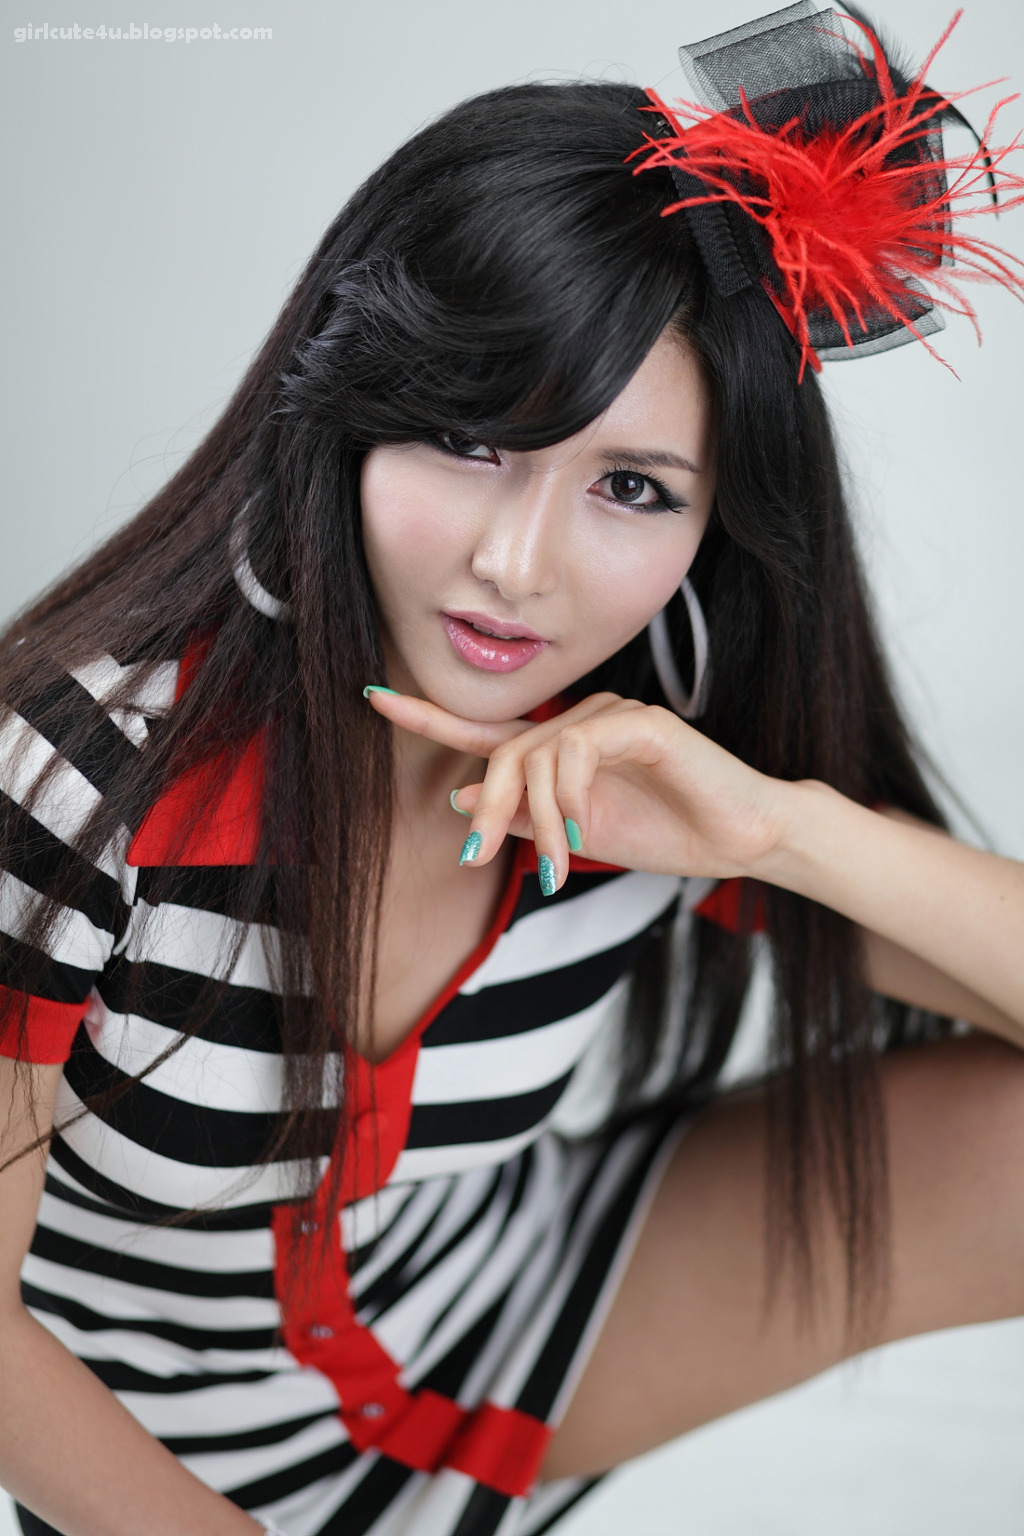 https://blogger.googleusercontent.com/img/b/R29vZ2xl/AVvXsEi8A4lC0MRJsv5O-88mPmH7BxJcj8Y5BbrZIO4fhuoeBqGYCh7NqgFwrt6nISbtCv5VXB1hdz63kErTNk7yIX4fDvHWUHu28OKXqrY47ulfKalQ3hhNwEMRwudBP6JAaHBoLbei25dxjswl/s1600/6++Cha+Sun+Hwa%252C+Black-White+and+Red-very+cute+asian+girl-girlcute4u.blogspot.com.jpg